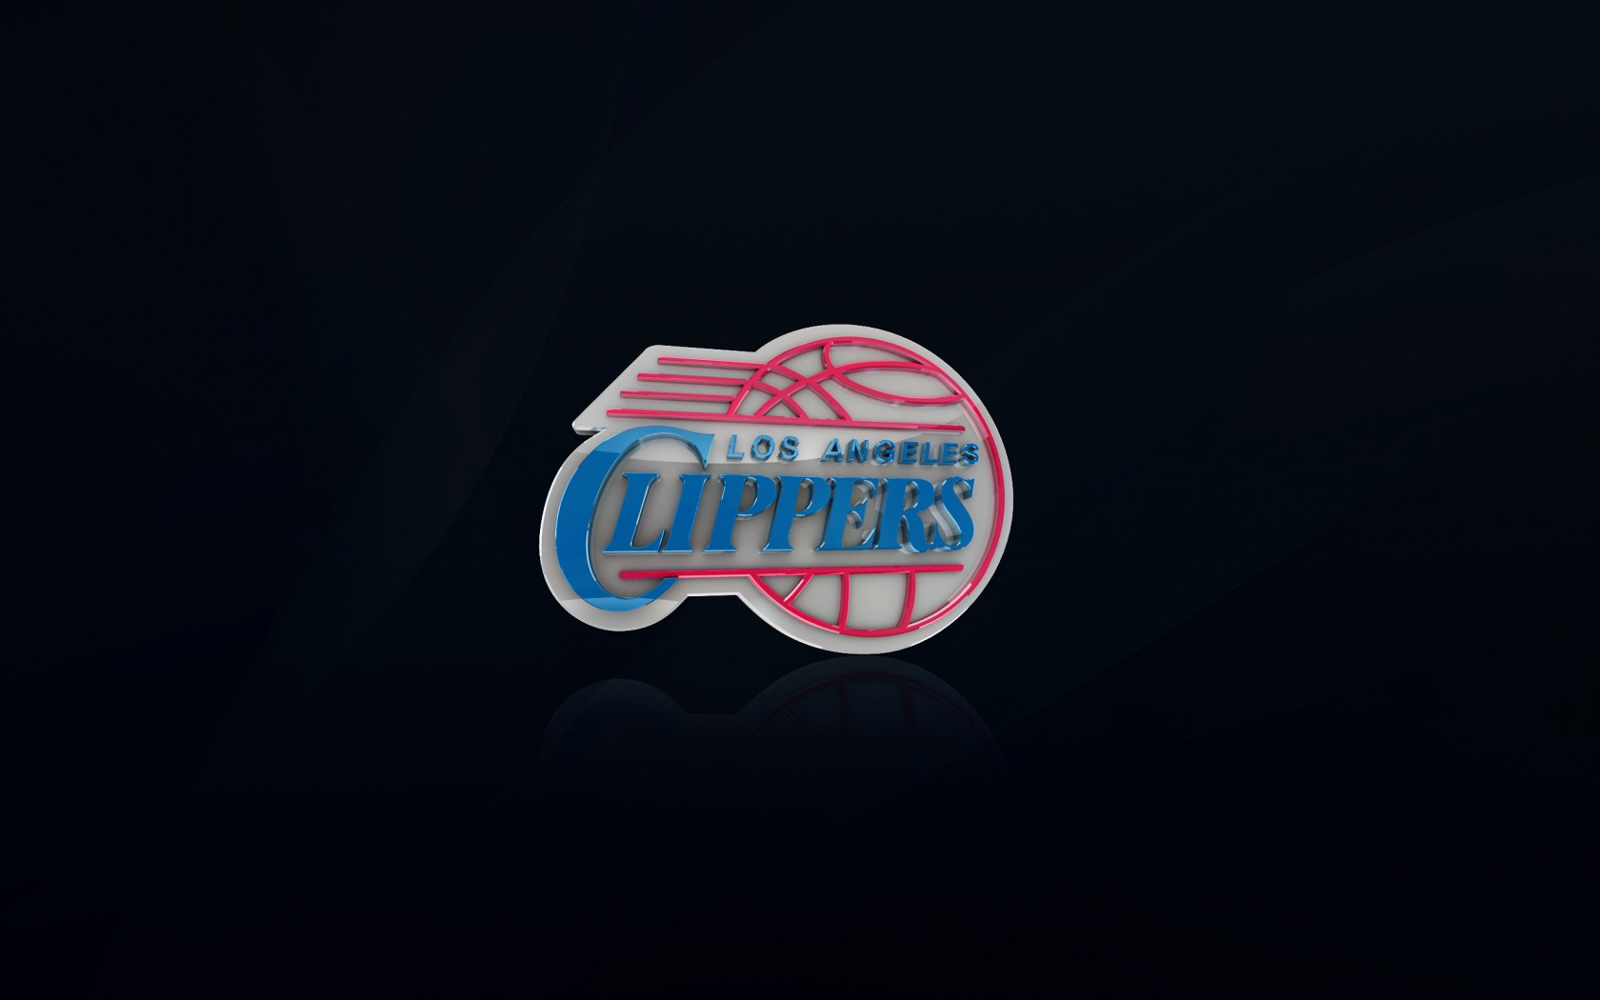 Los Angeles Clippers 2013 Logo NBA USA Hd Desktop Wallpaper MRSPORT